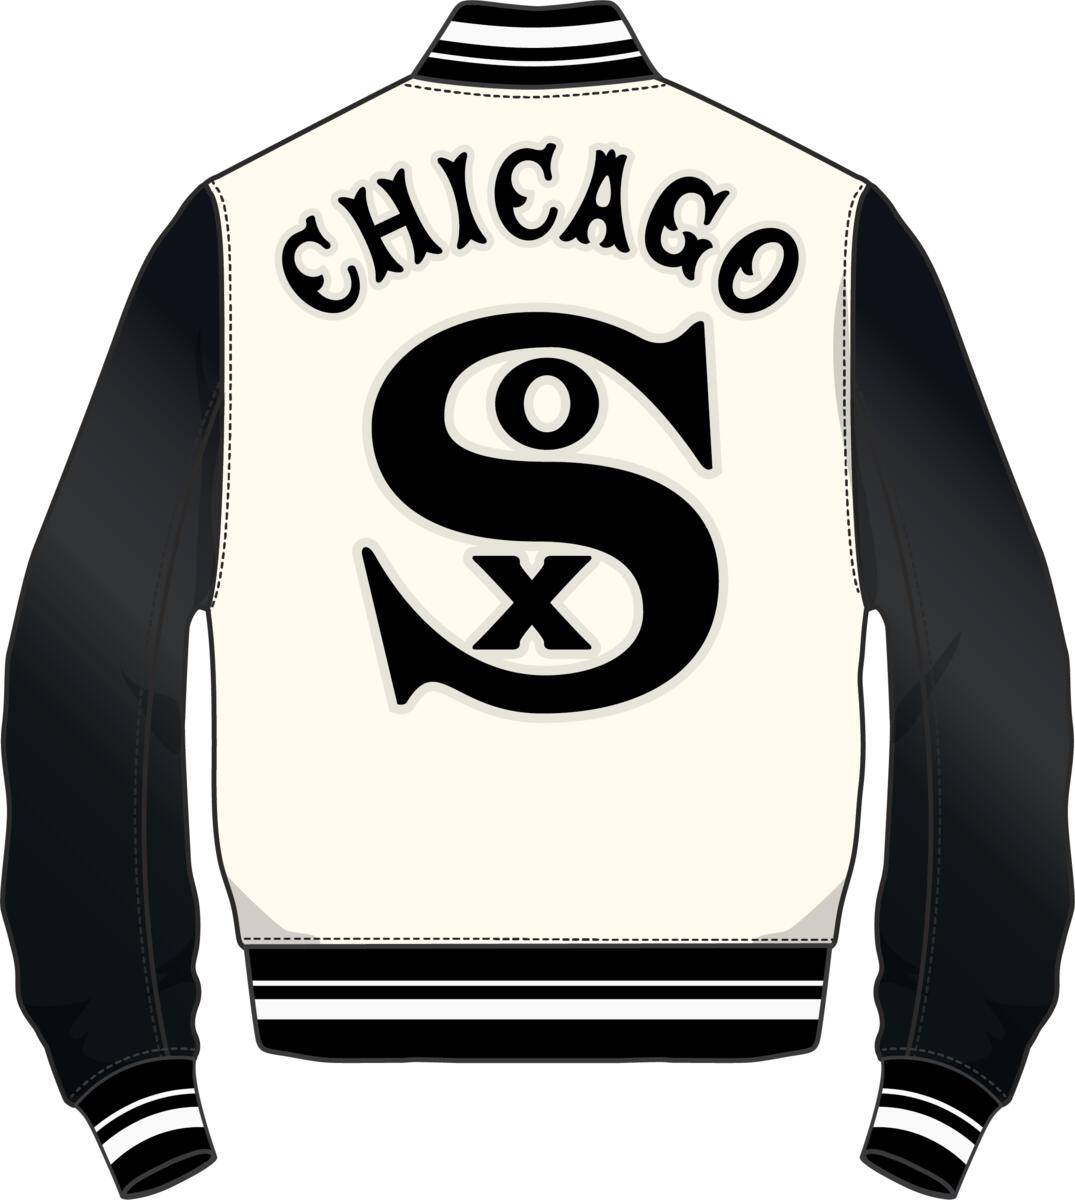 Chicago White Sox Retro Classic Wool Cream Pro Standard Jacket